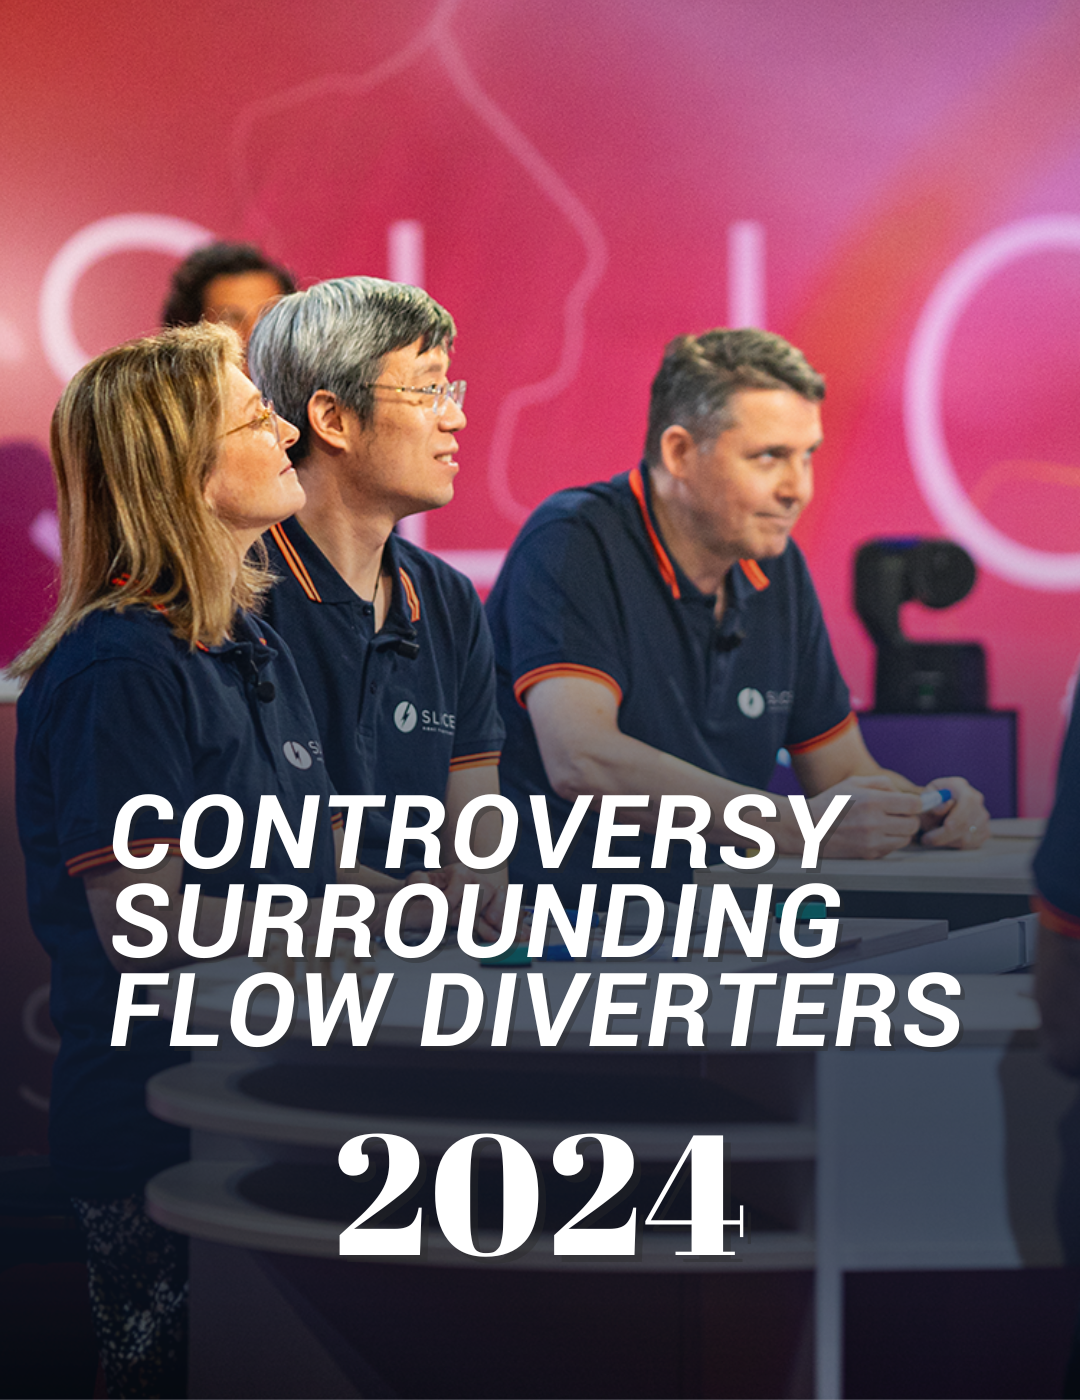 Controversy surrounding flow diverters 2024